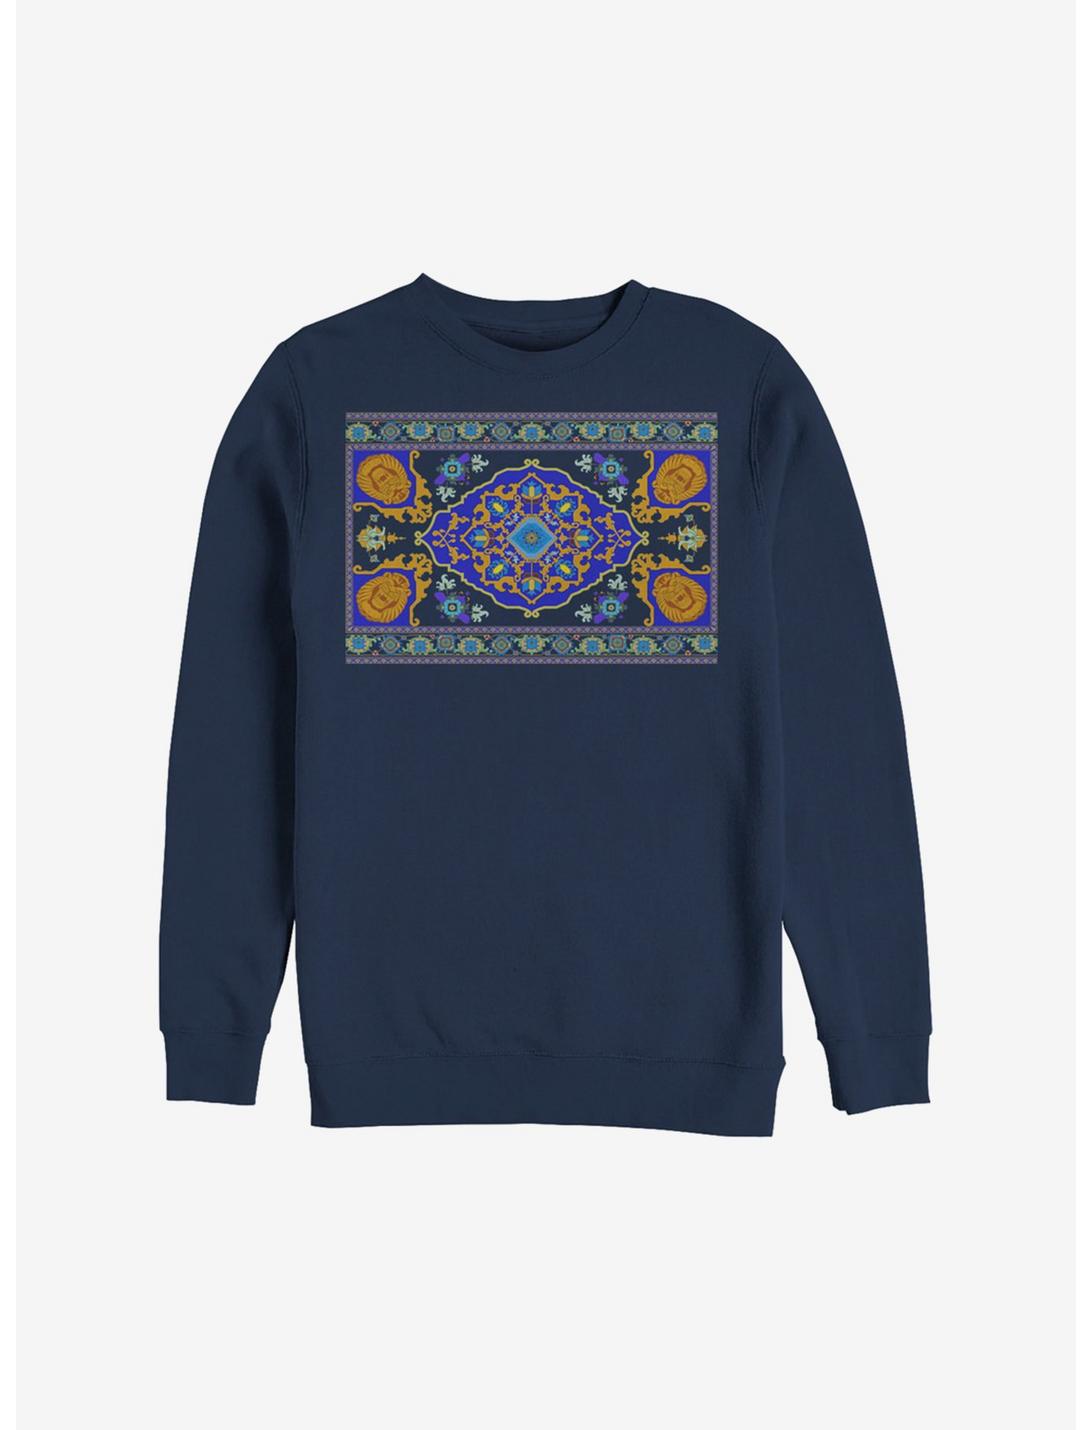 Disney Aladdin 2019 Magic Carpet Panel Print Sweatshirt, NAVY, hi-res